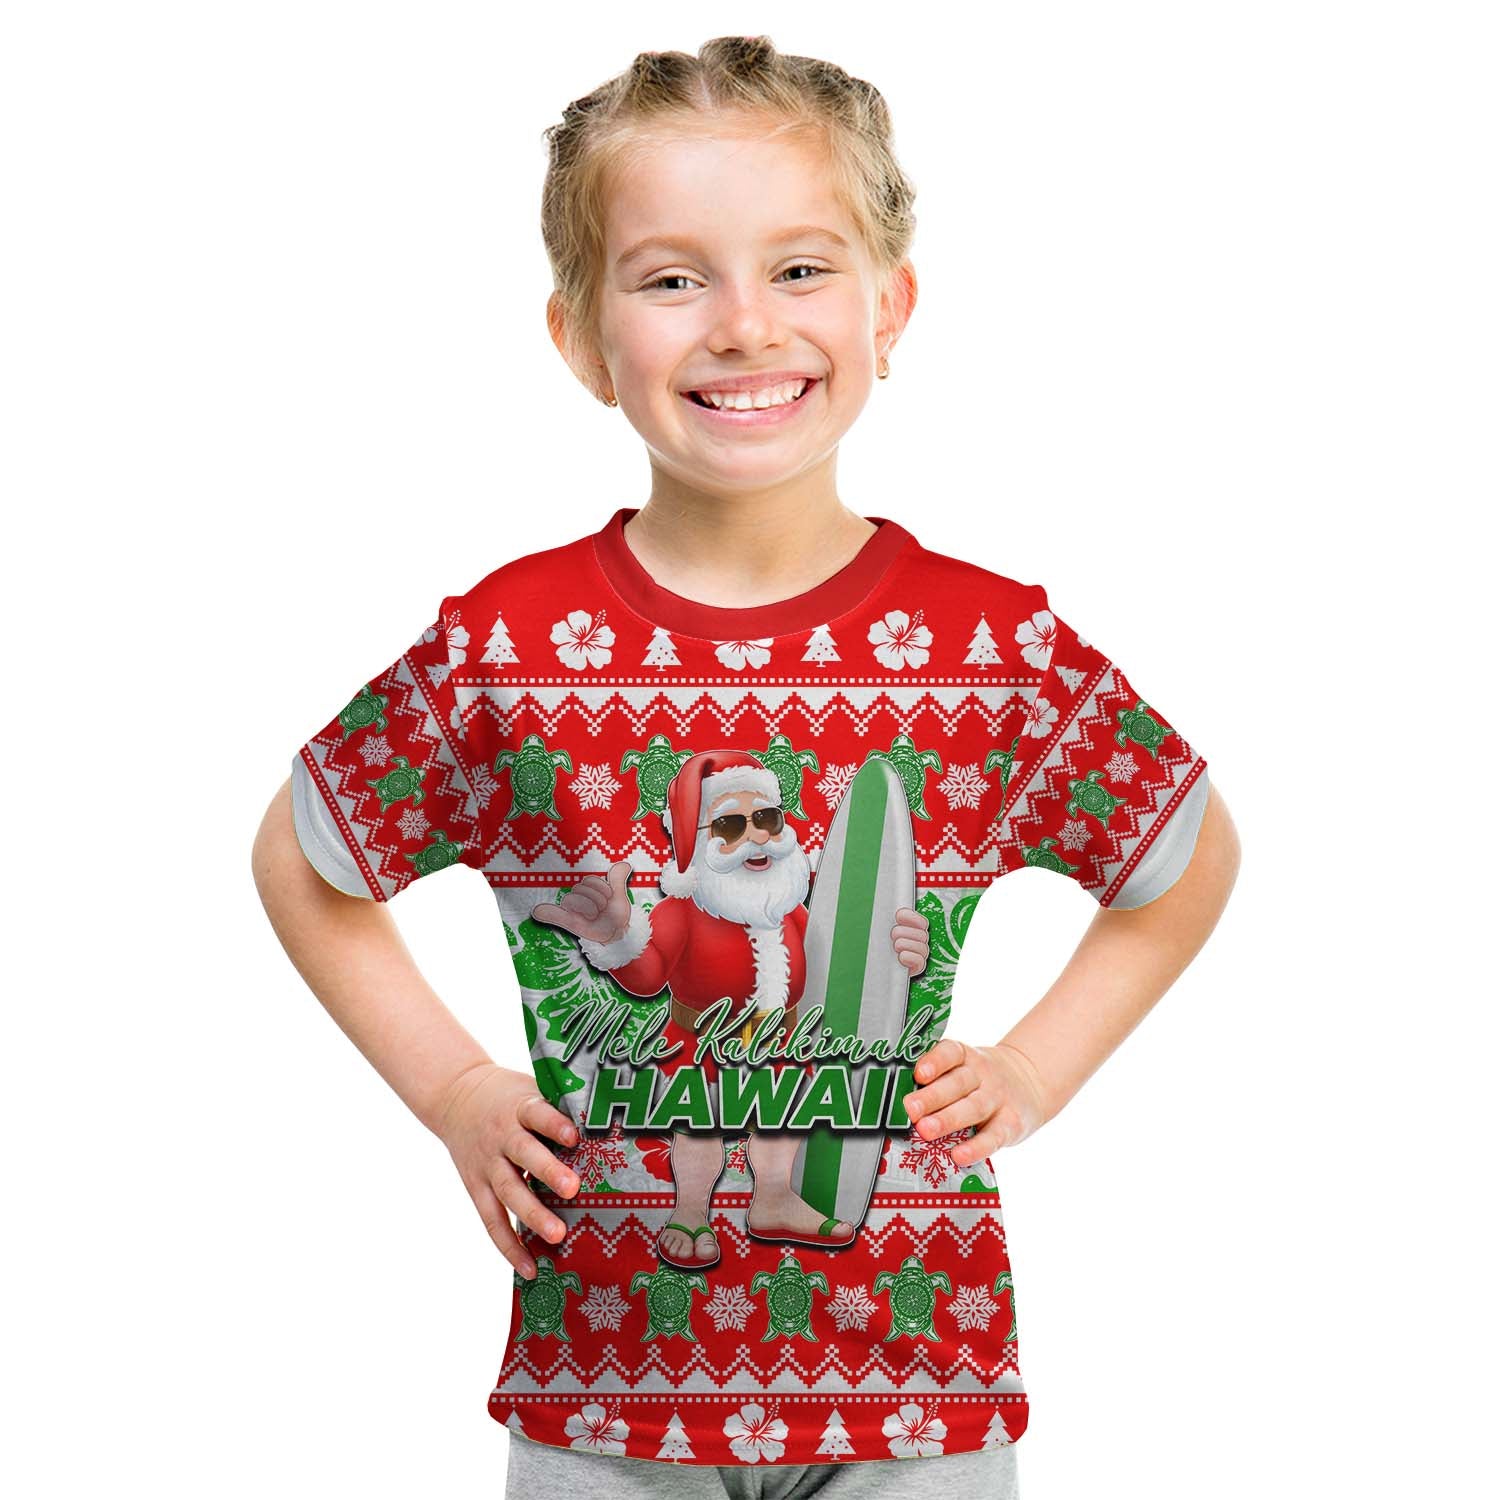 Hawaii Mele Kalikimaka Christmas T Shirt Kid Cool Santa Claus LT6 - Polynesian Pride